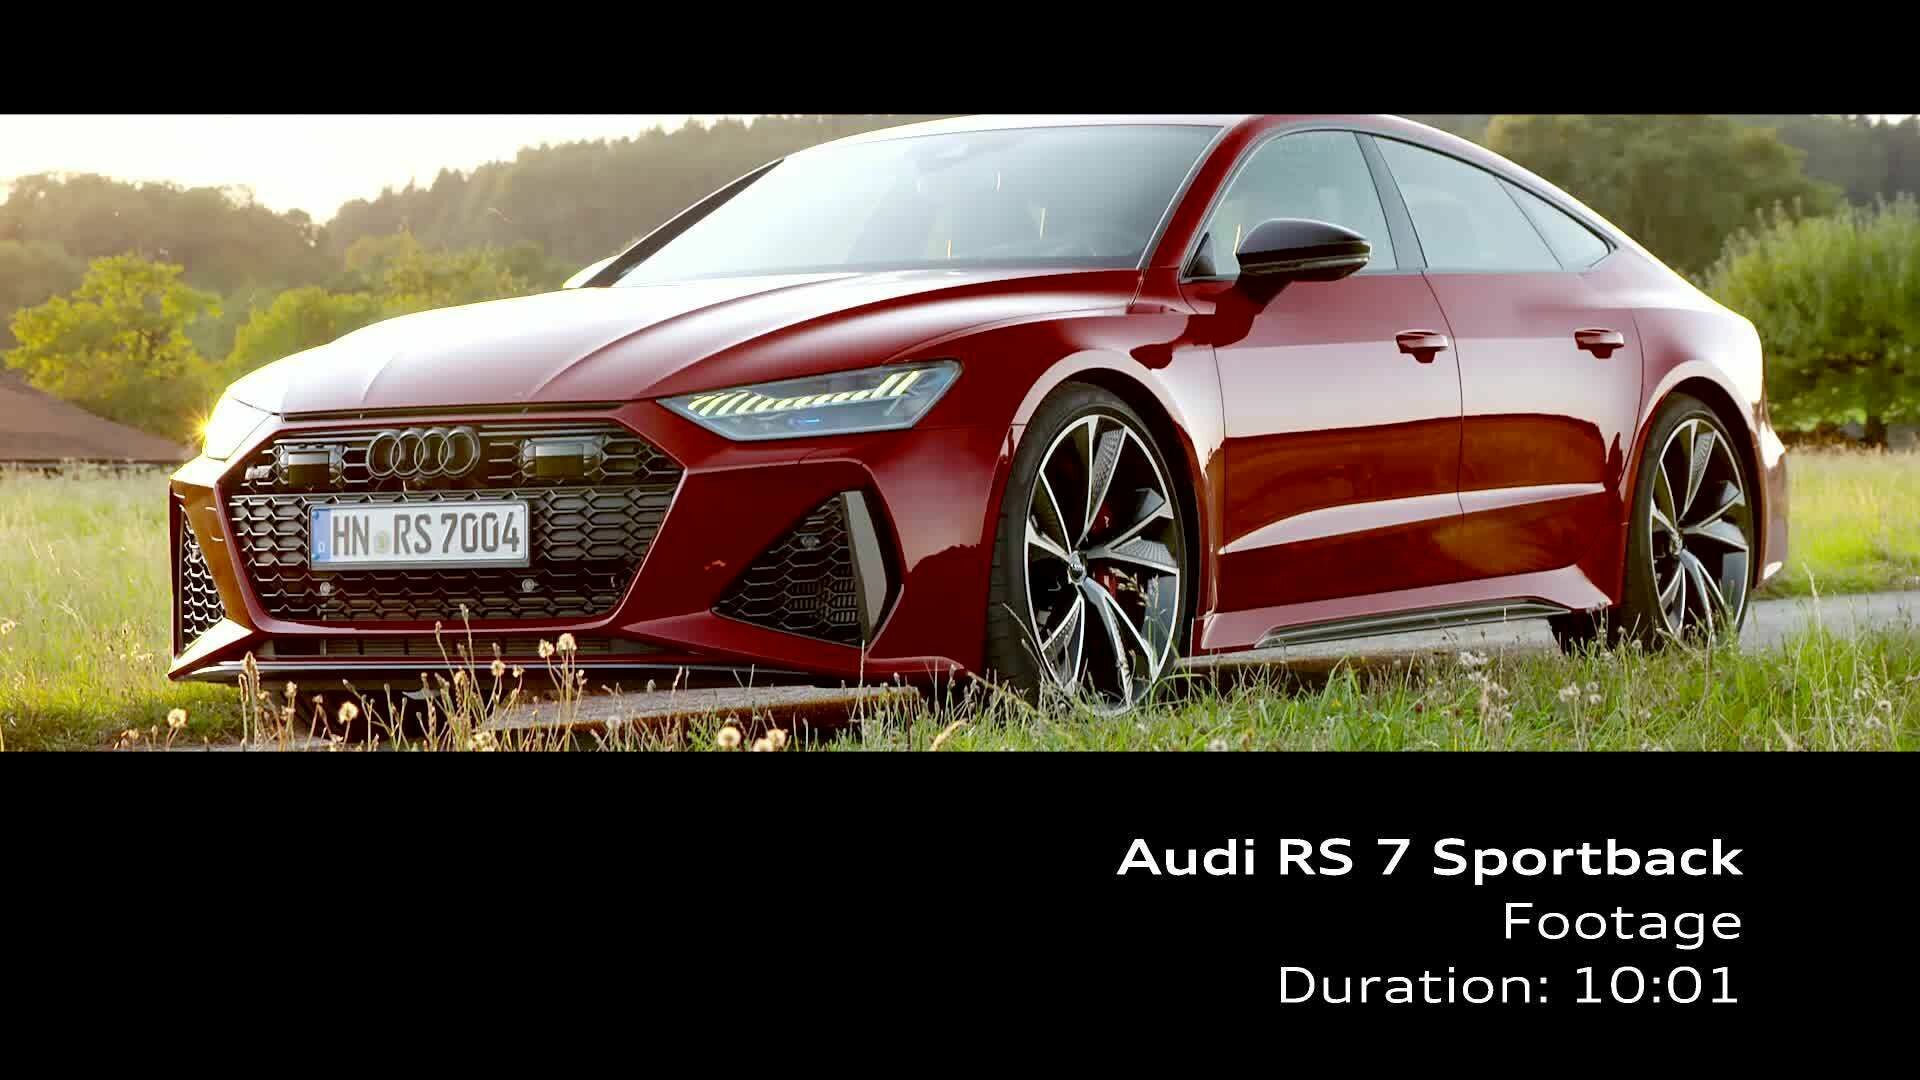 Audi RS 7 Sportback Tango red (Footage)